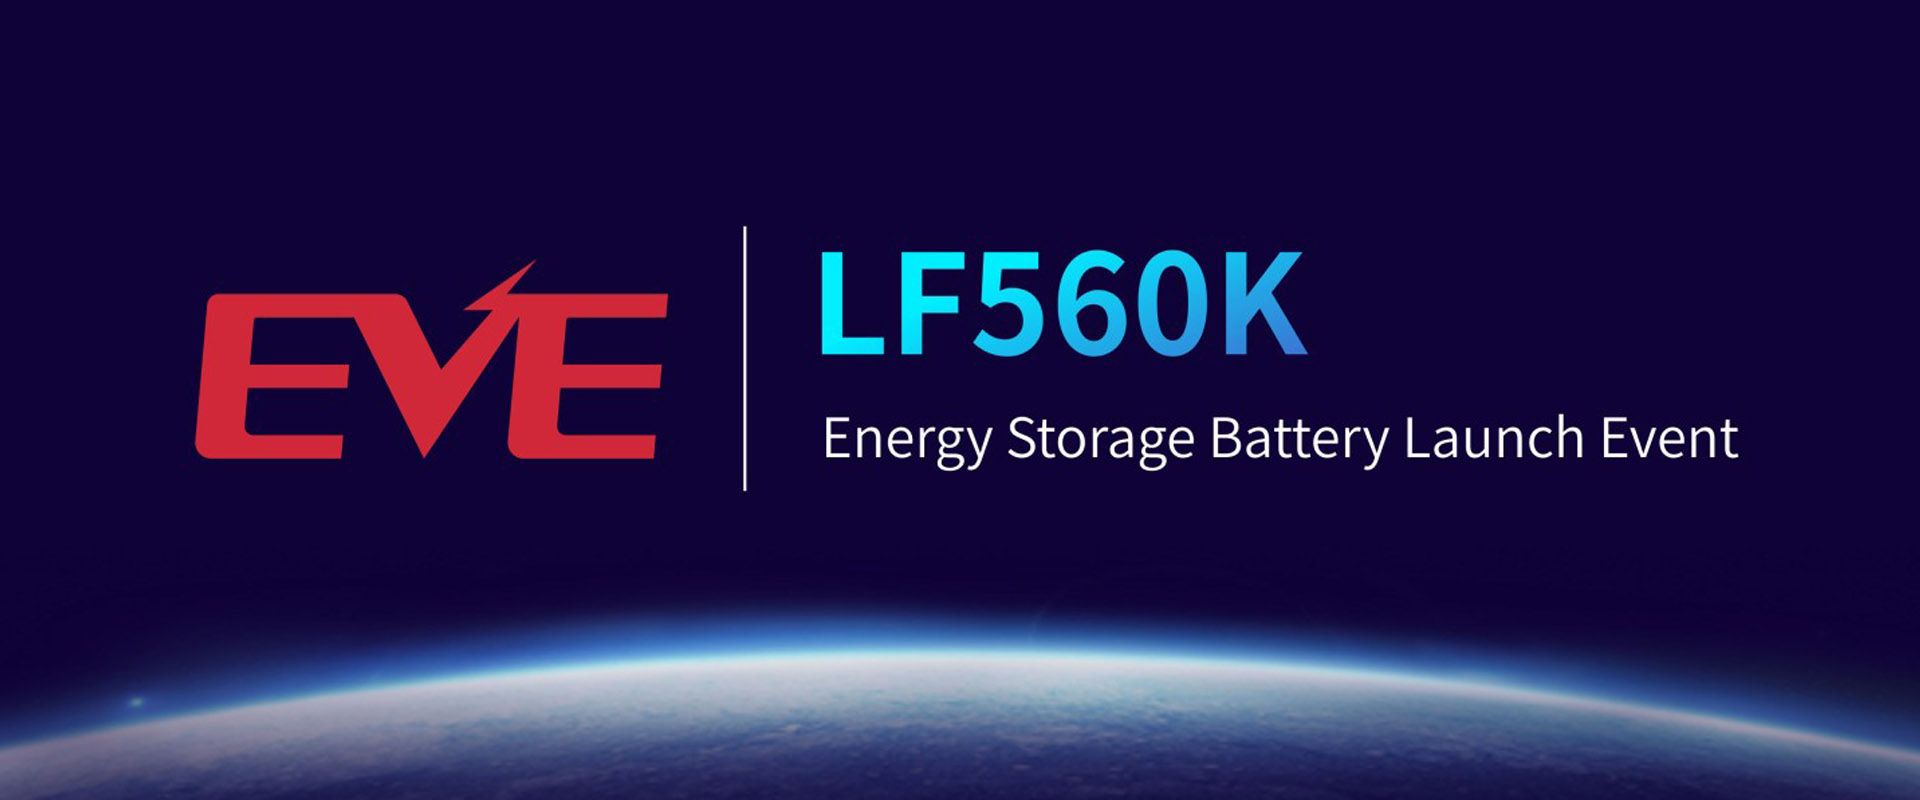 China's-EVE-Energy-Launches-New-generation-Energy-Storage-Battery-LF560K 1920